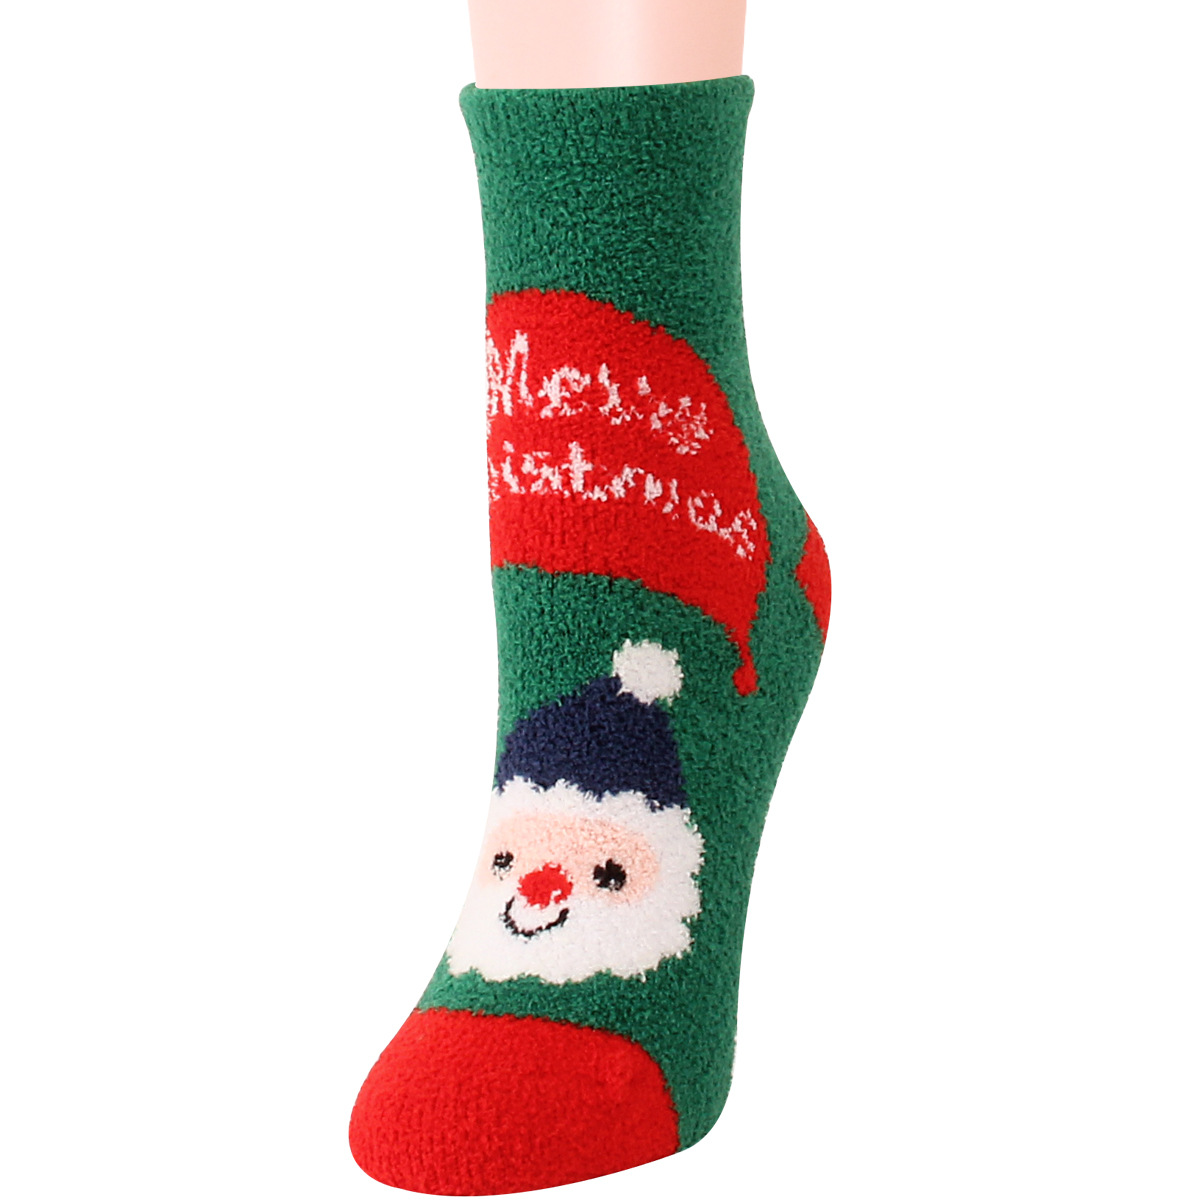 12 Pairs Coral Fleece Warm Winter Socks Cartoon Christmas Holiday Stockings Bulk Wholesale